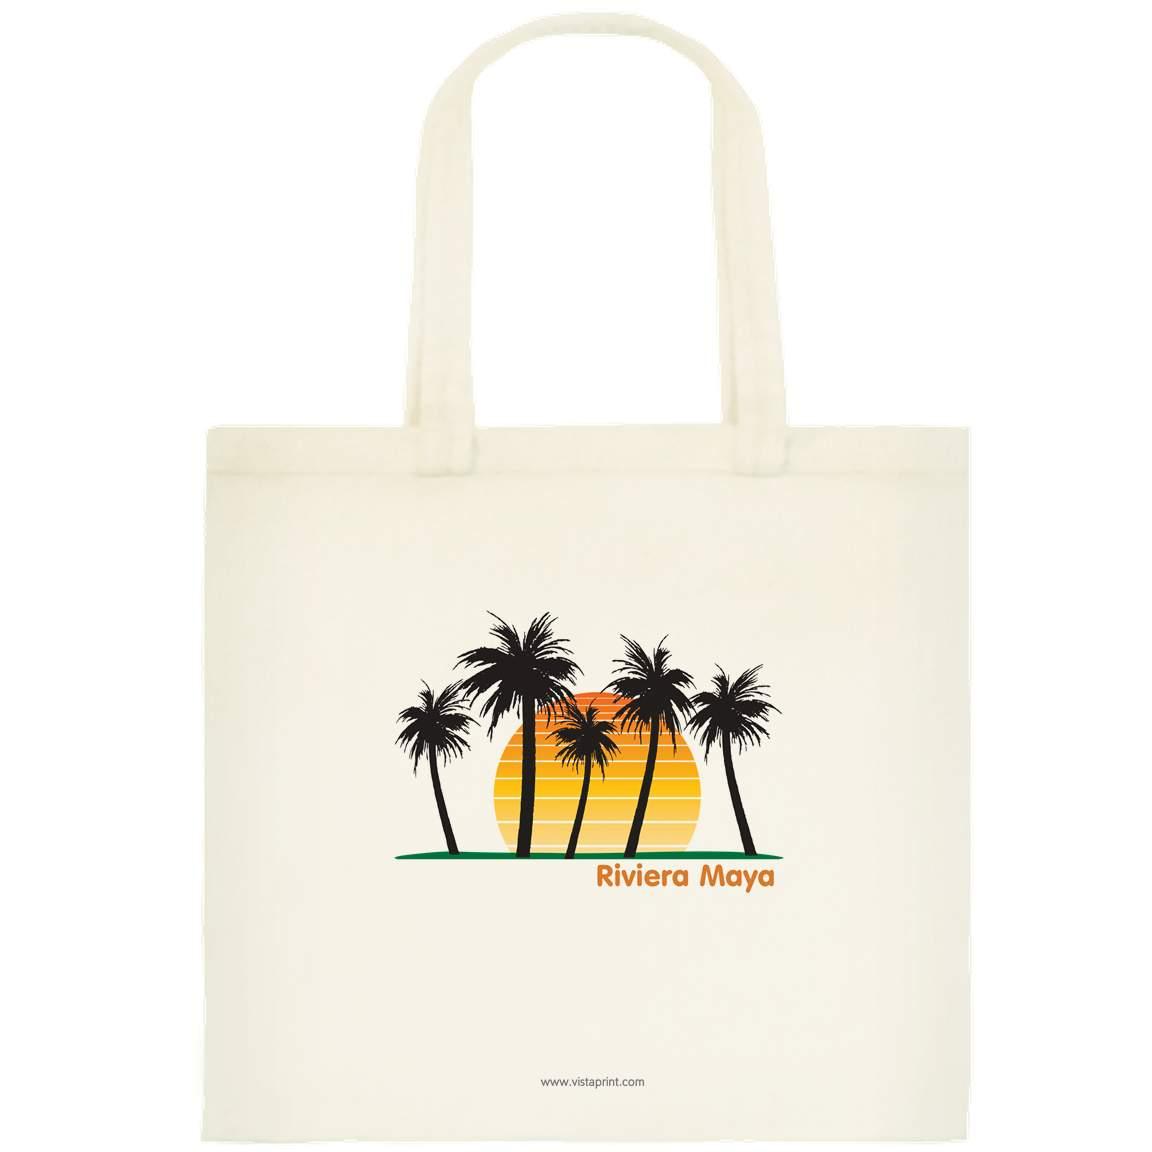 Riviera Maya OOT bags and Bachelorette Flip flops -- Free!